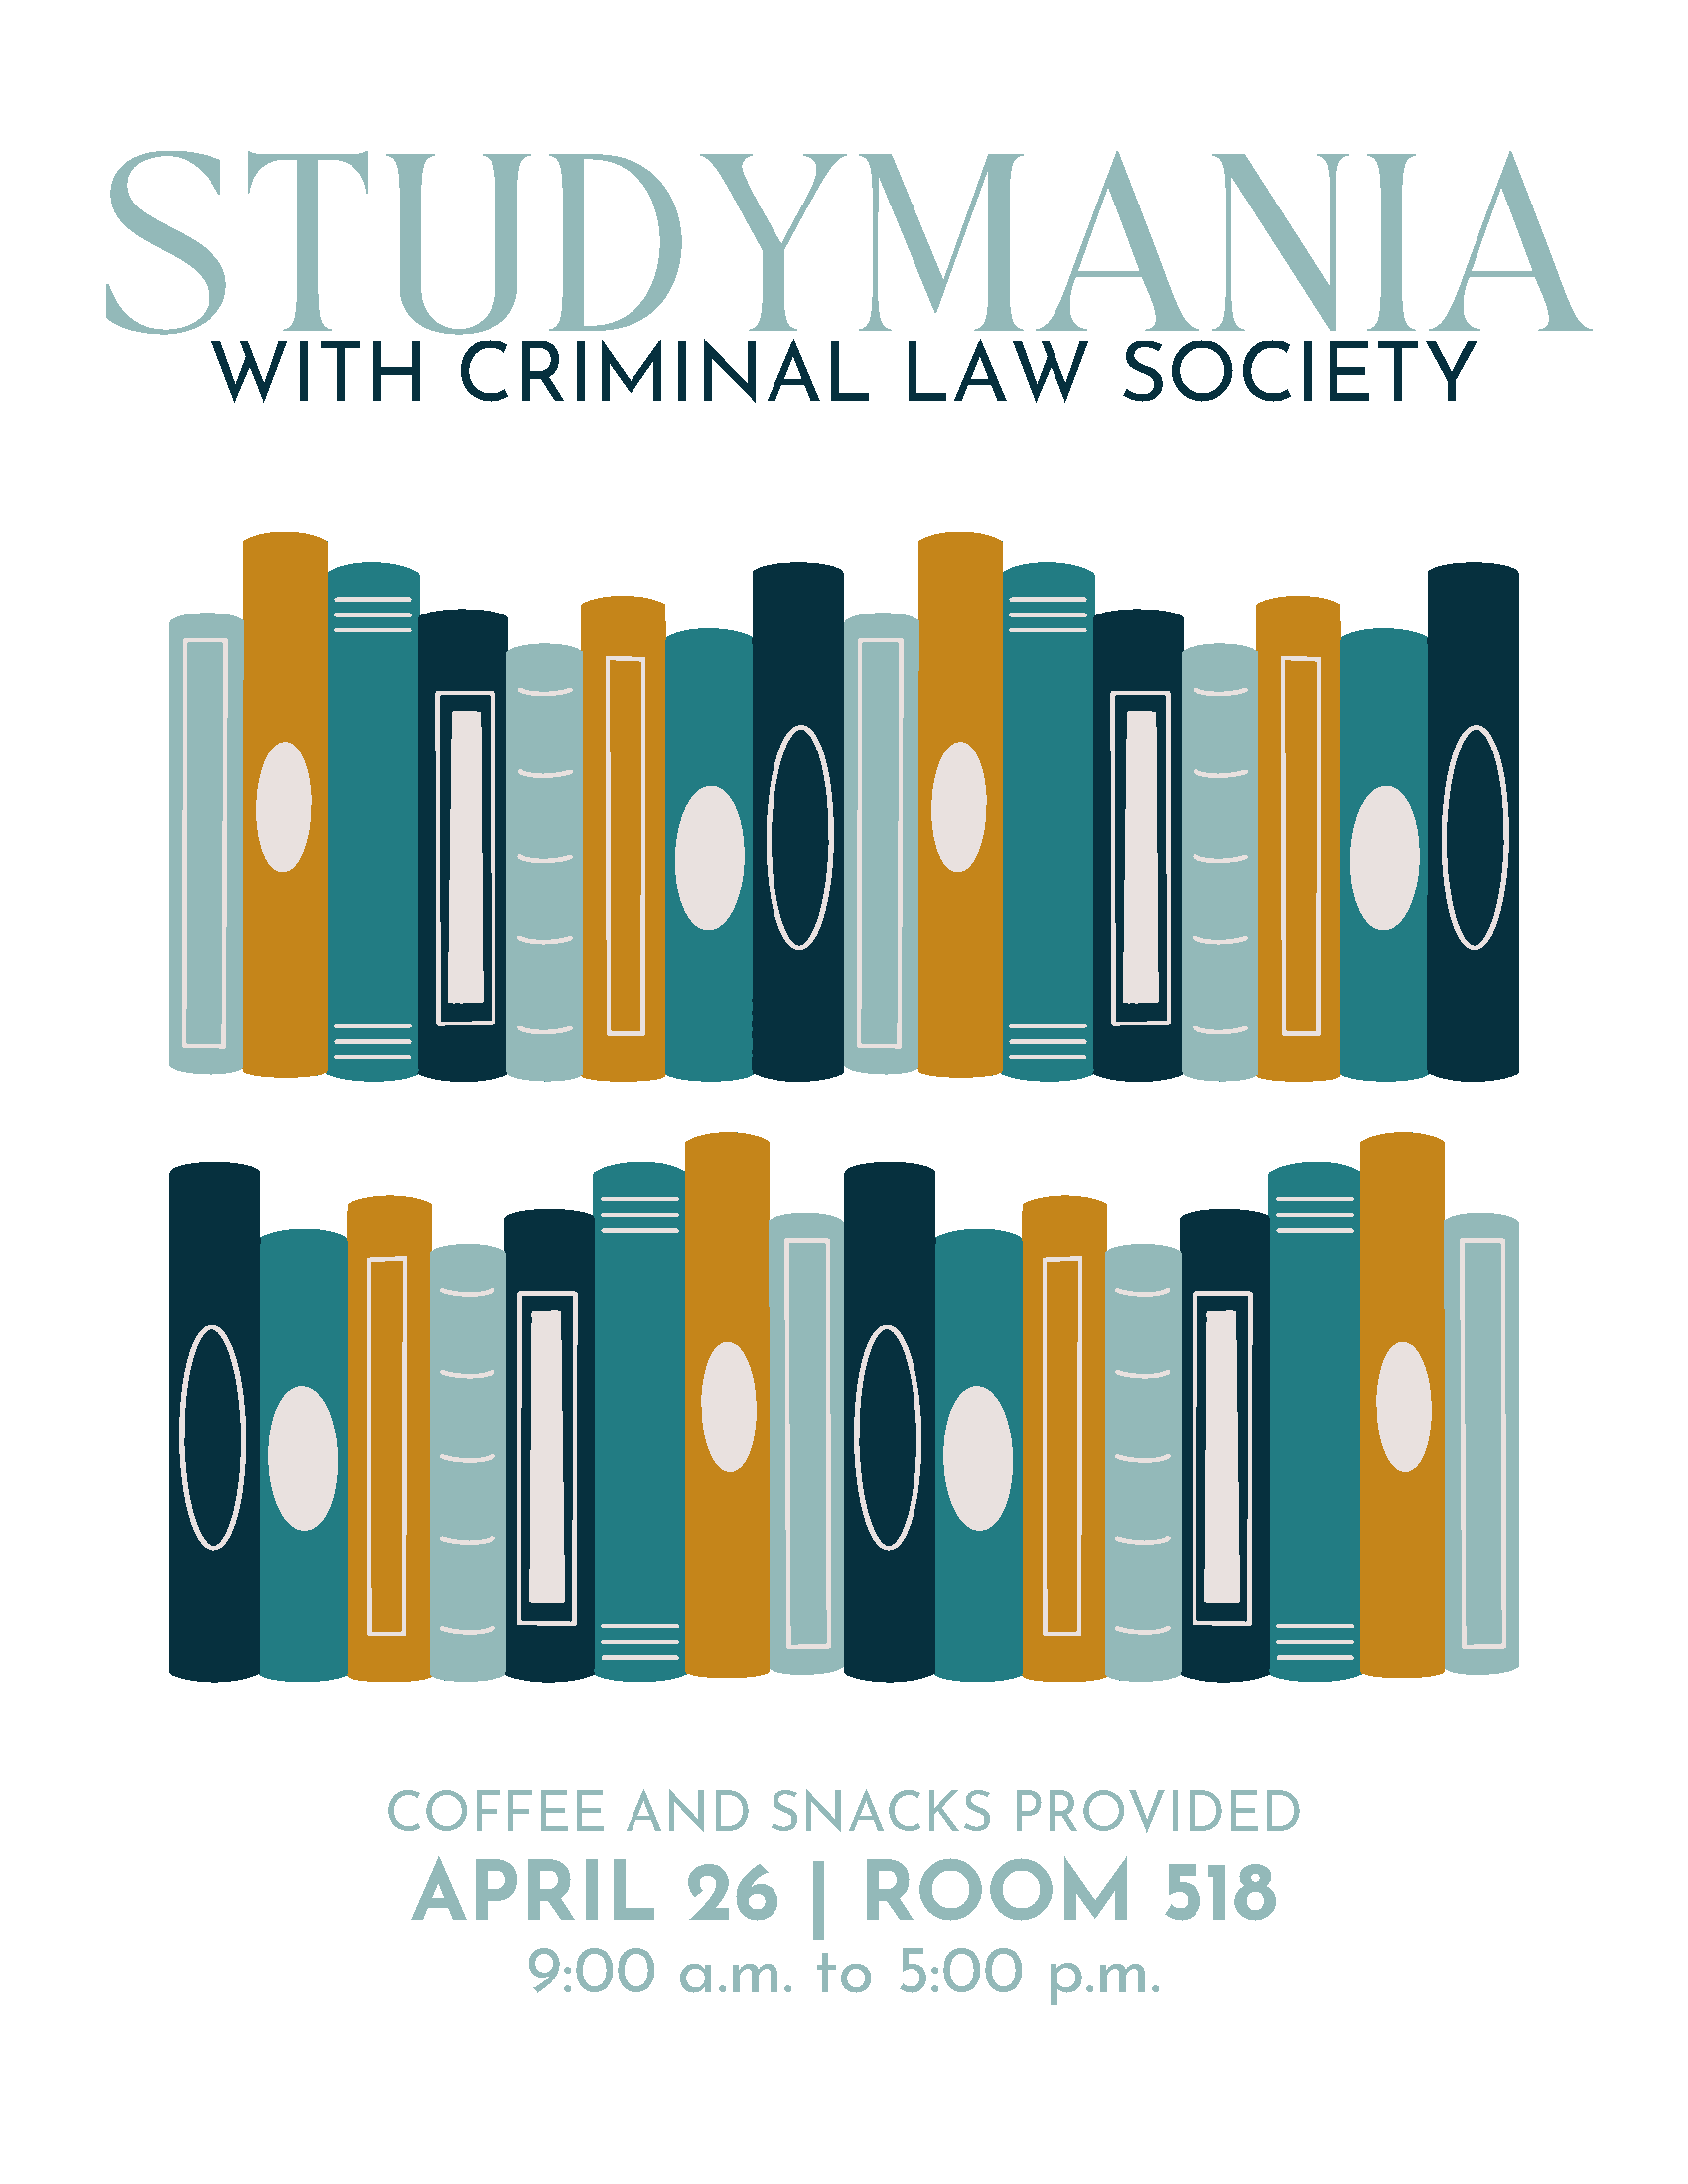 Studymania with Criminal Law Society